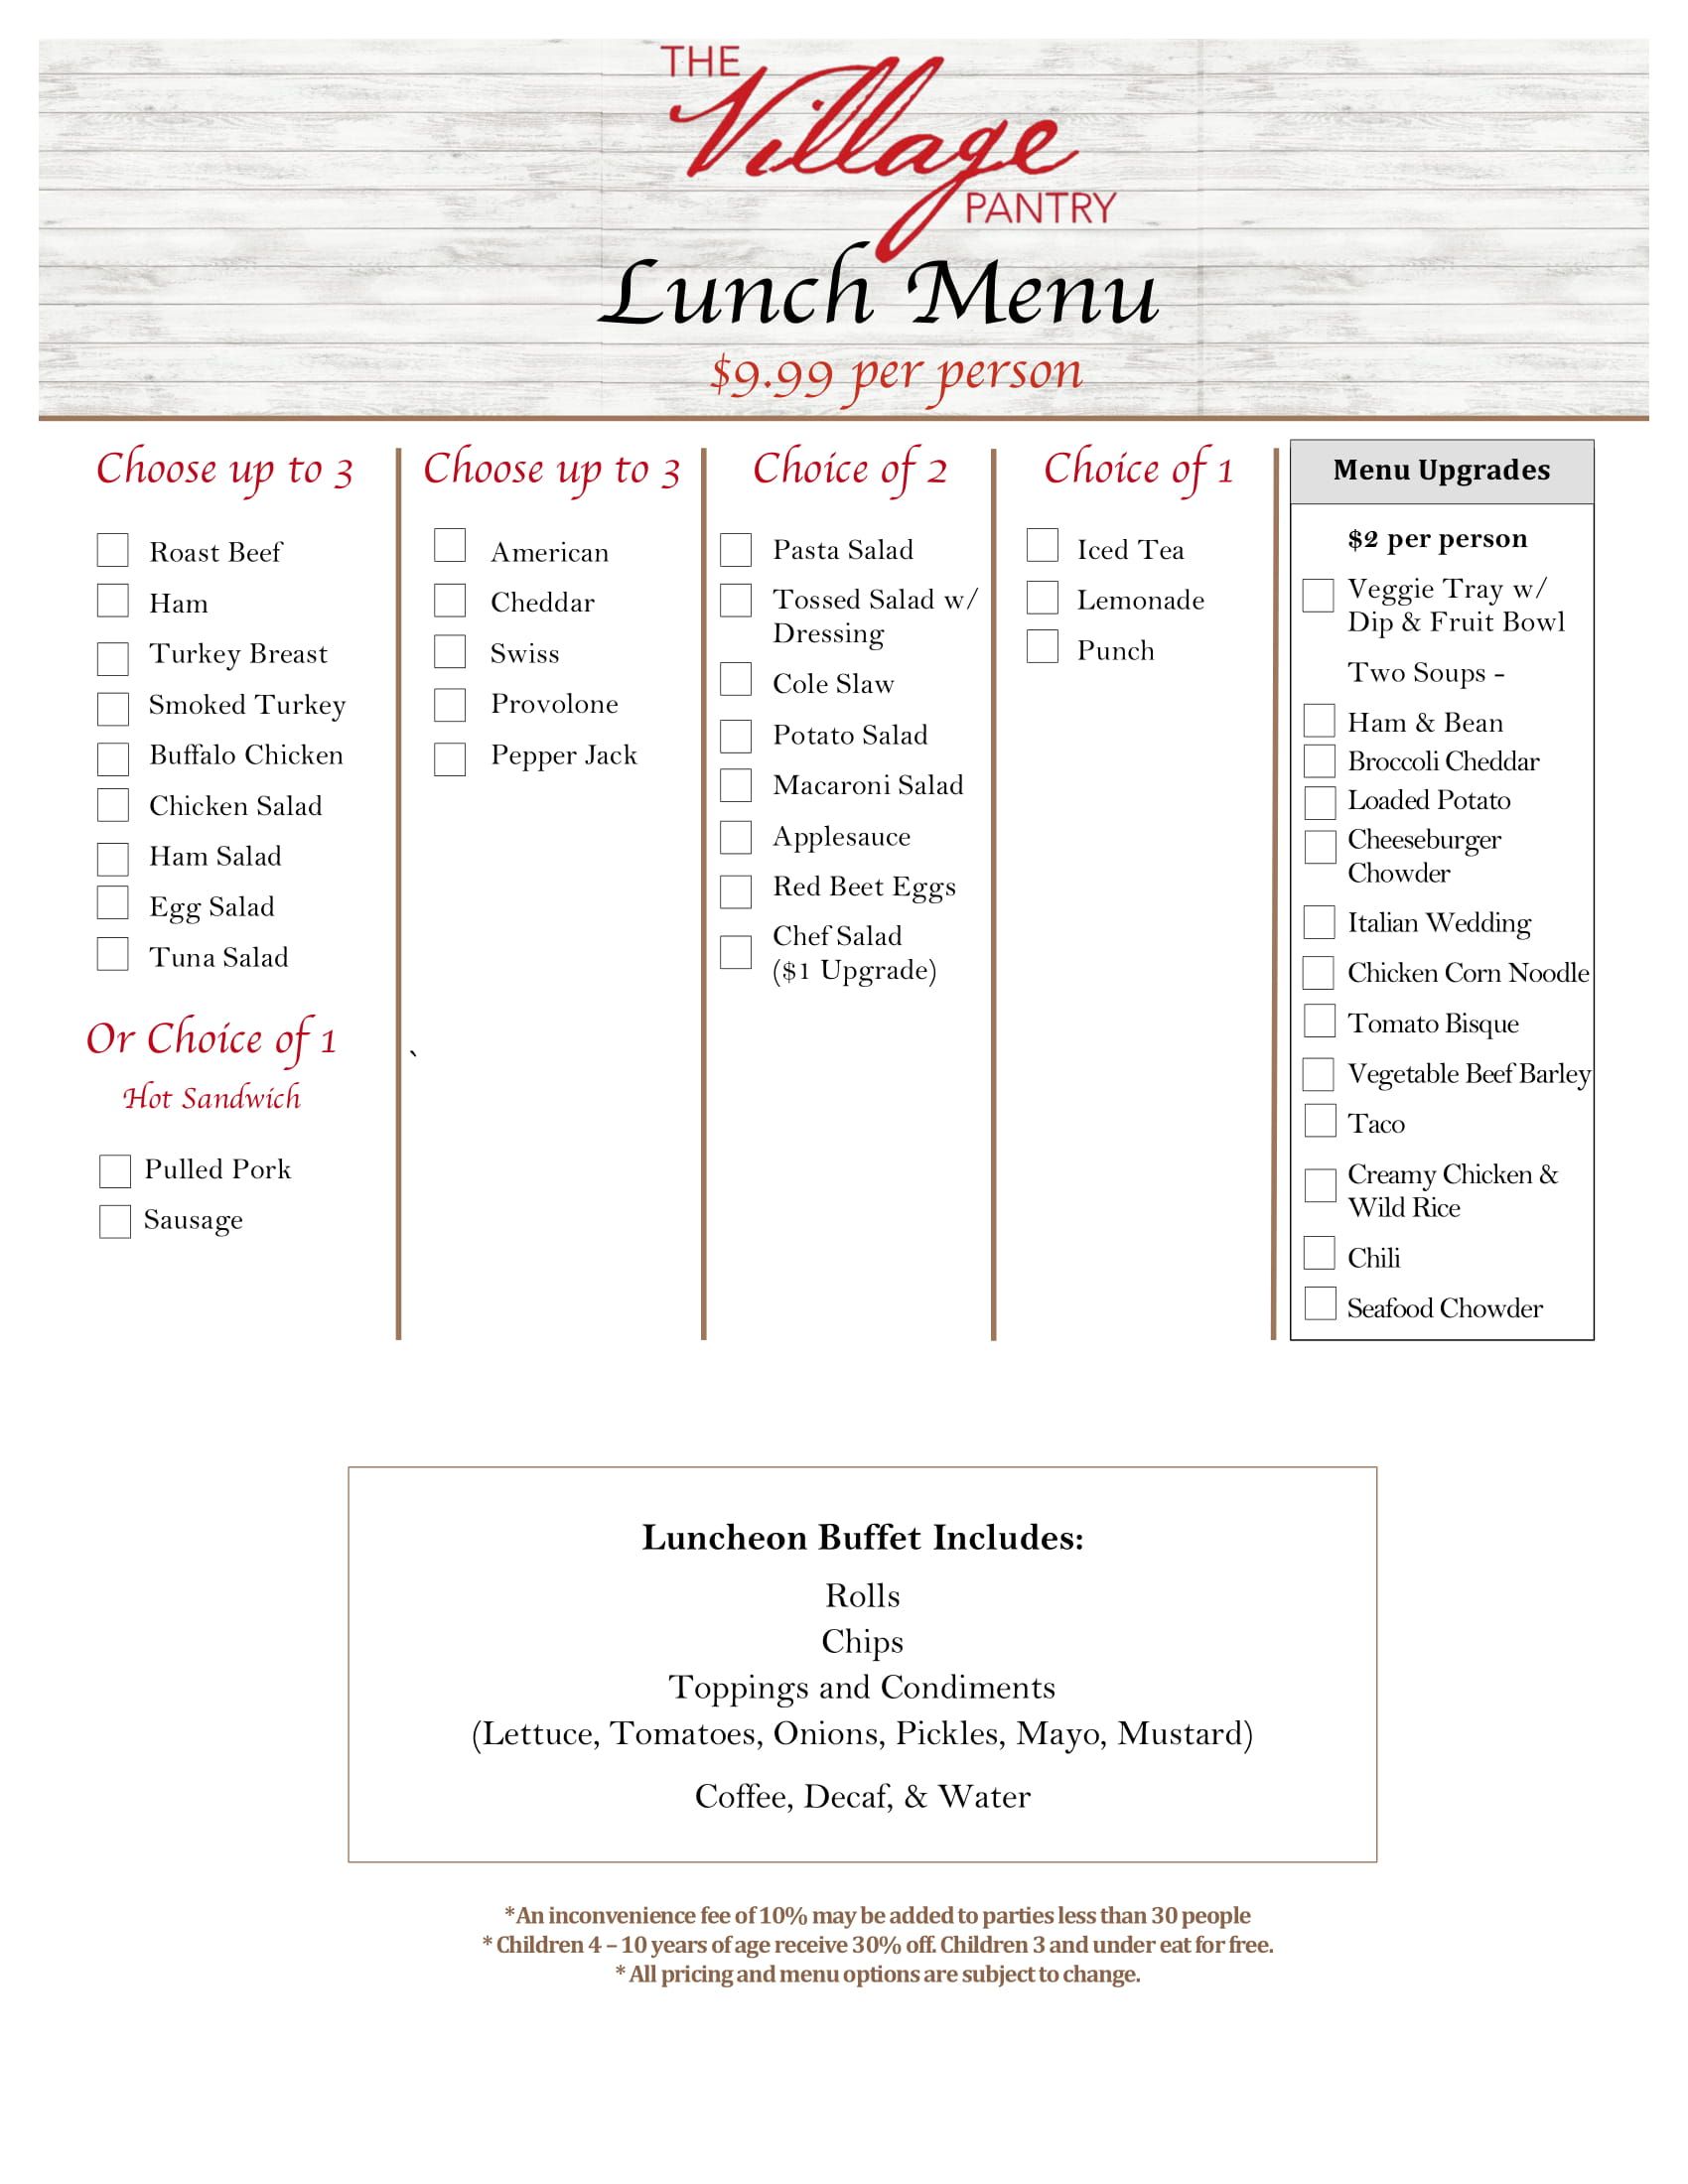 Lunch Menu List — Tyrone, PA — The Village Pantry